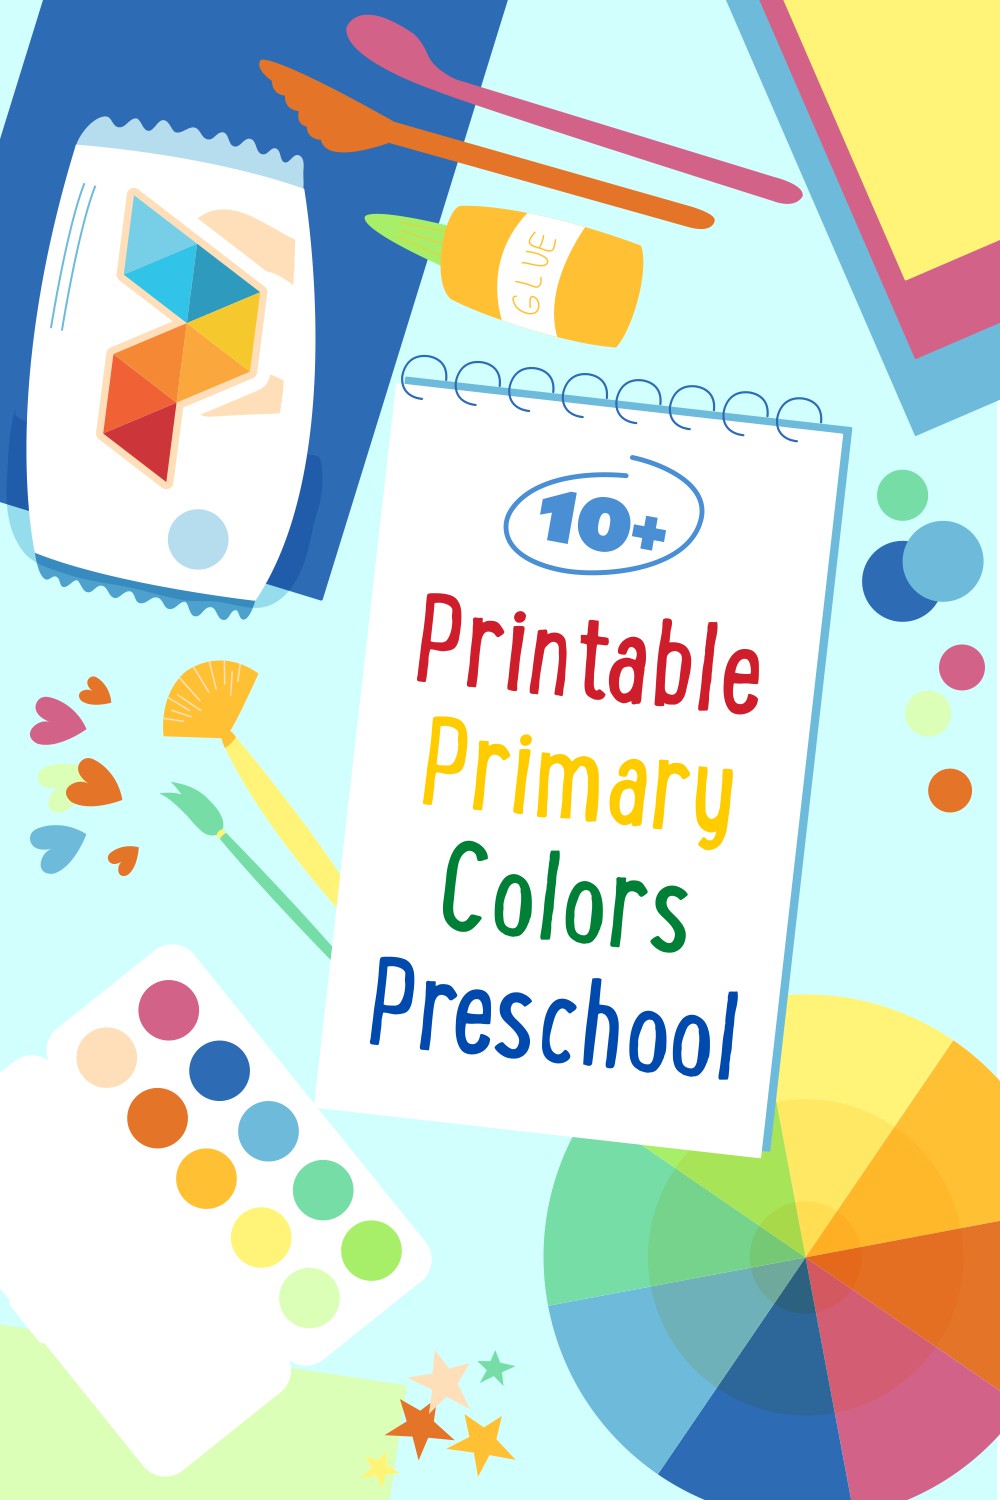 Printable Primary Colors Preschool